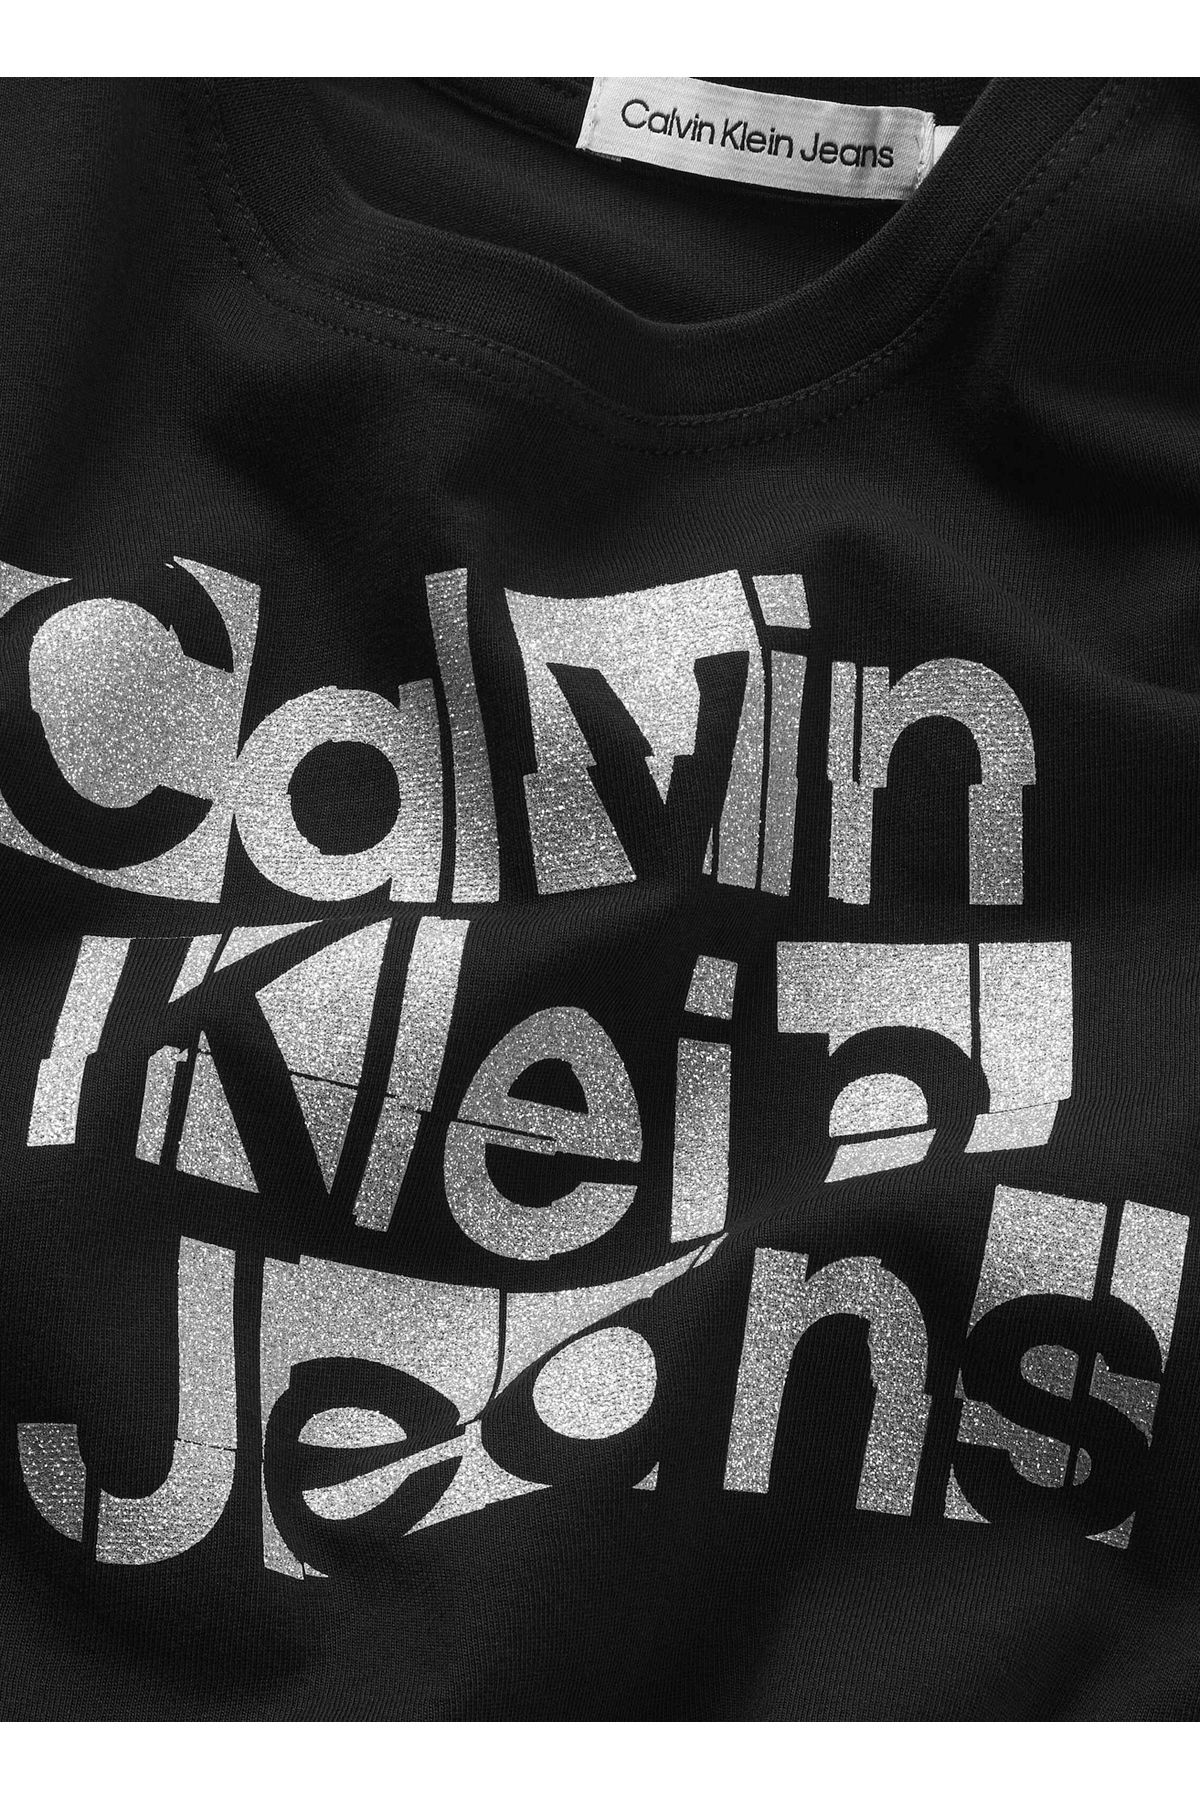 Calvin Klein Calvin Klein تی‌شرت زنانه مشبک متالیک با الگوی چاپ شده کلوین کلین